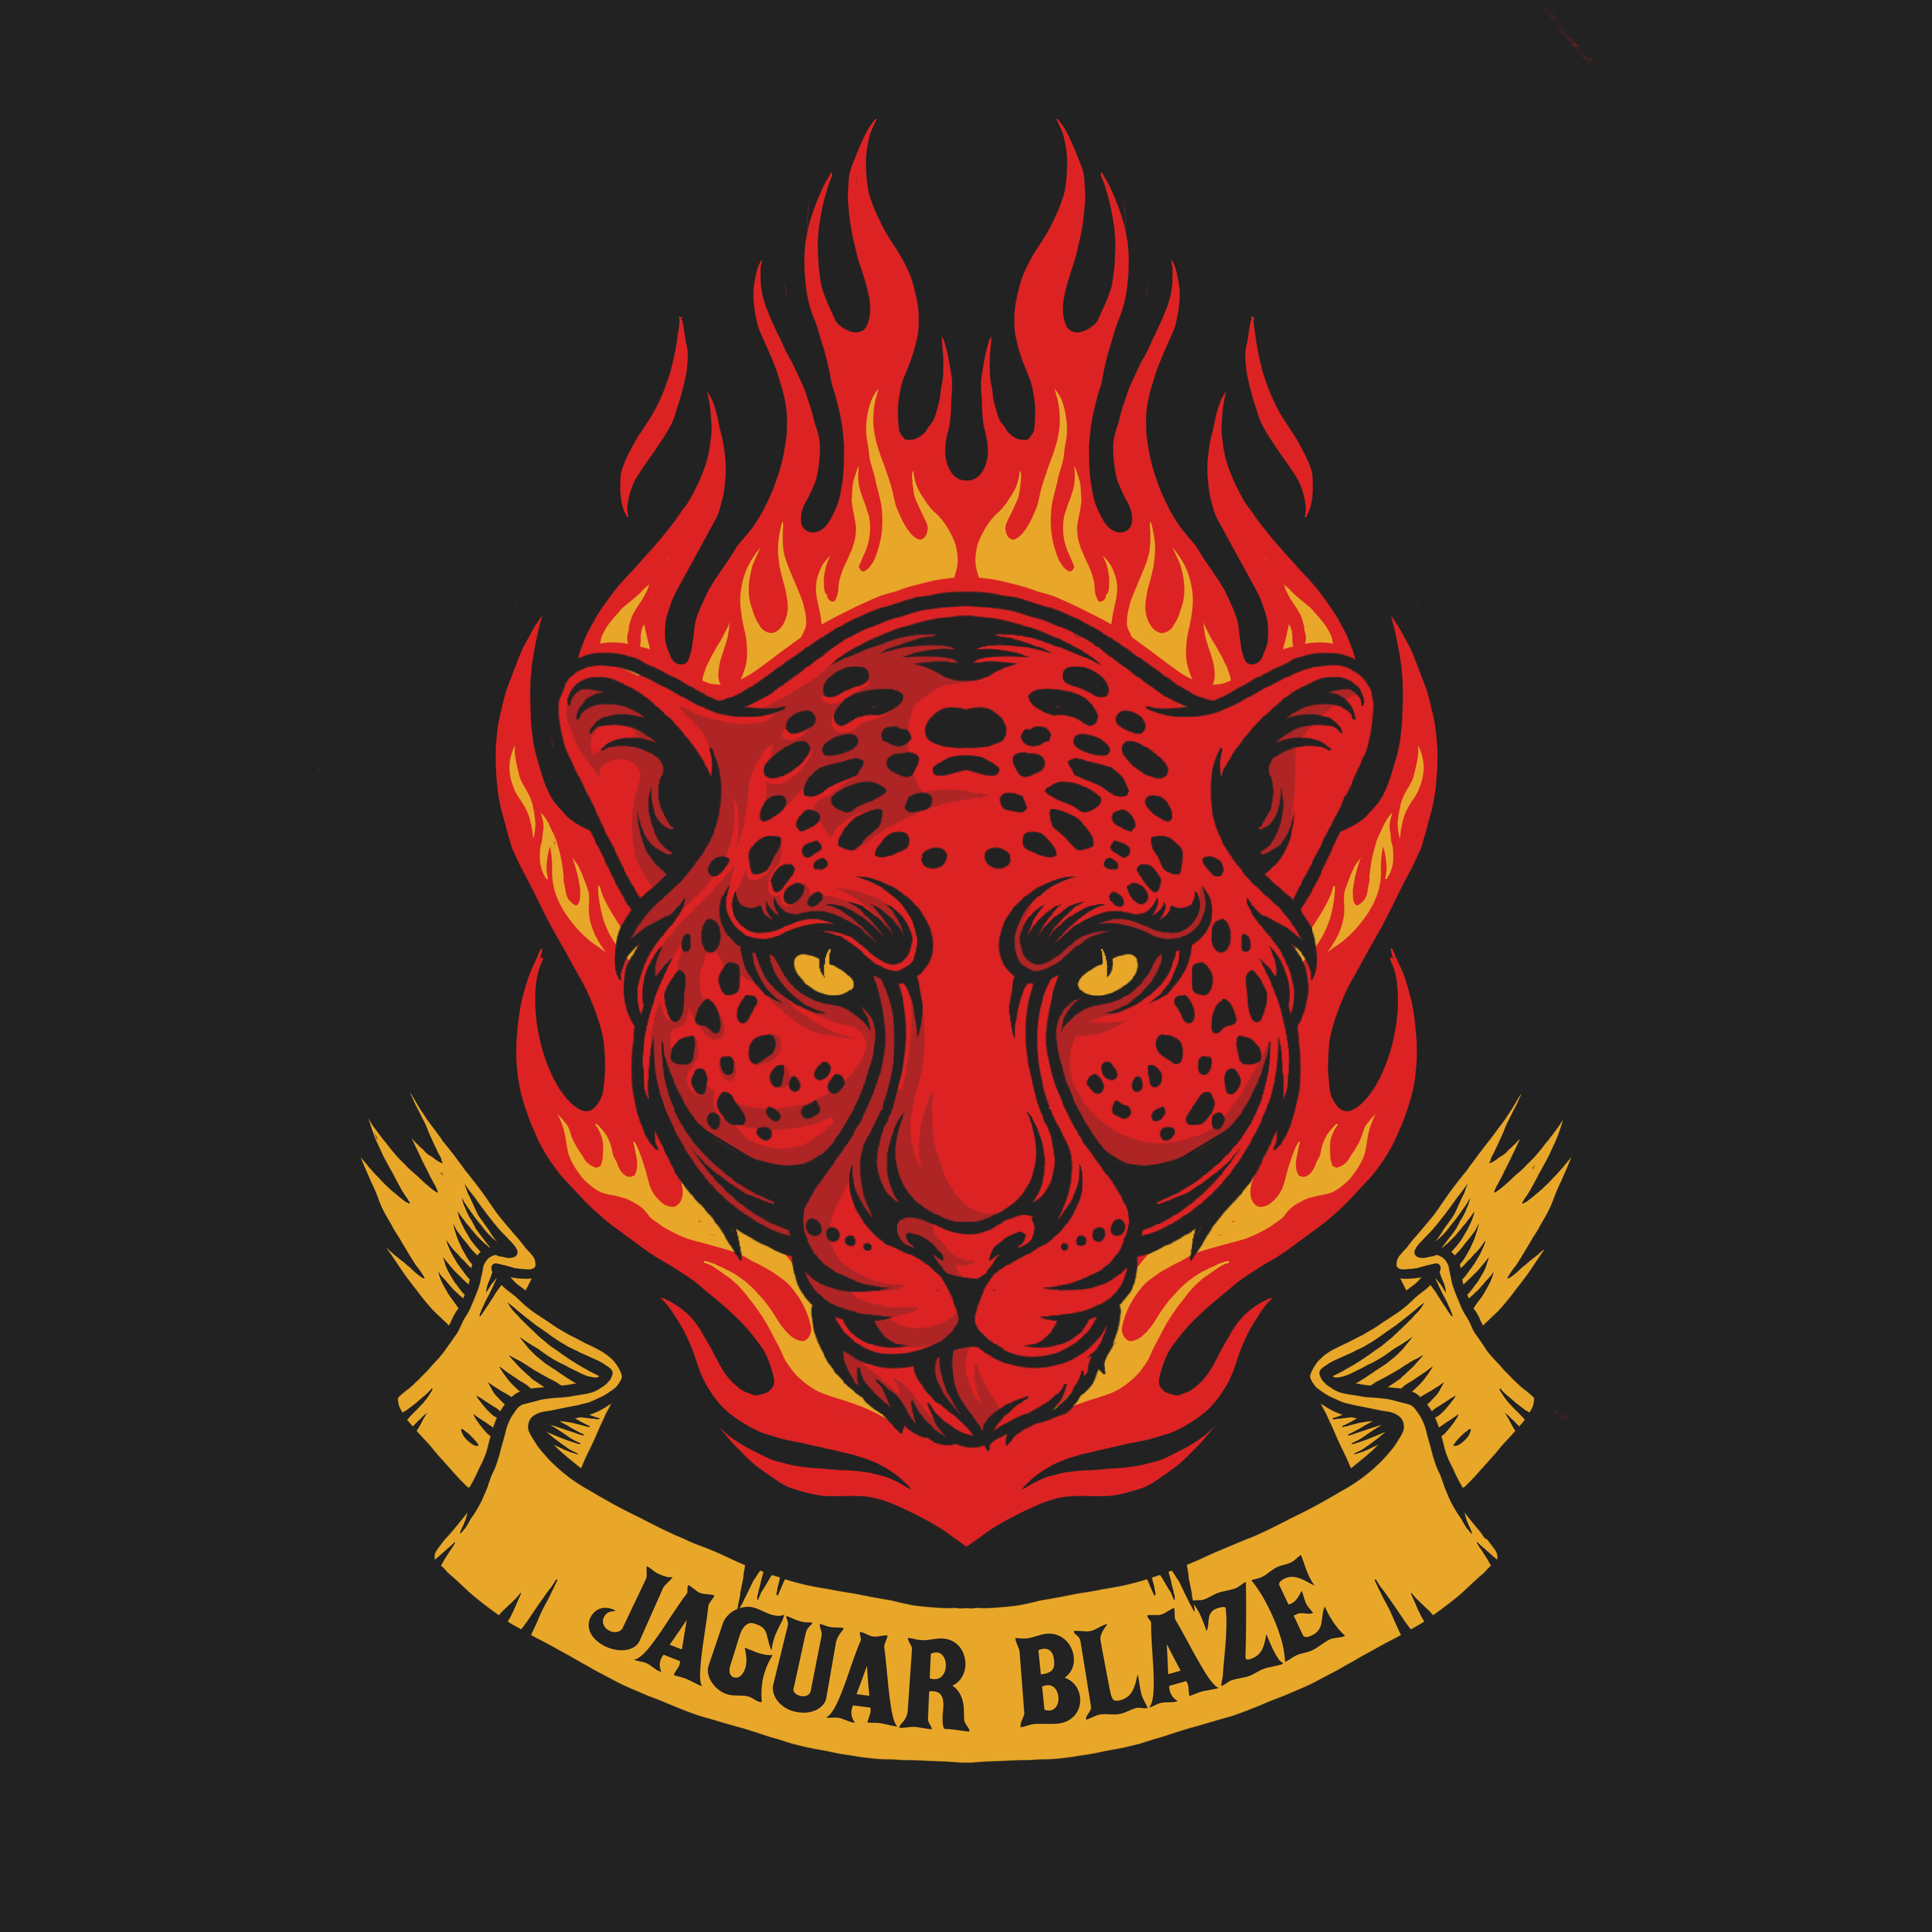 (c) Jaguarblaze.com